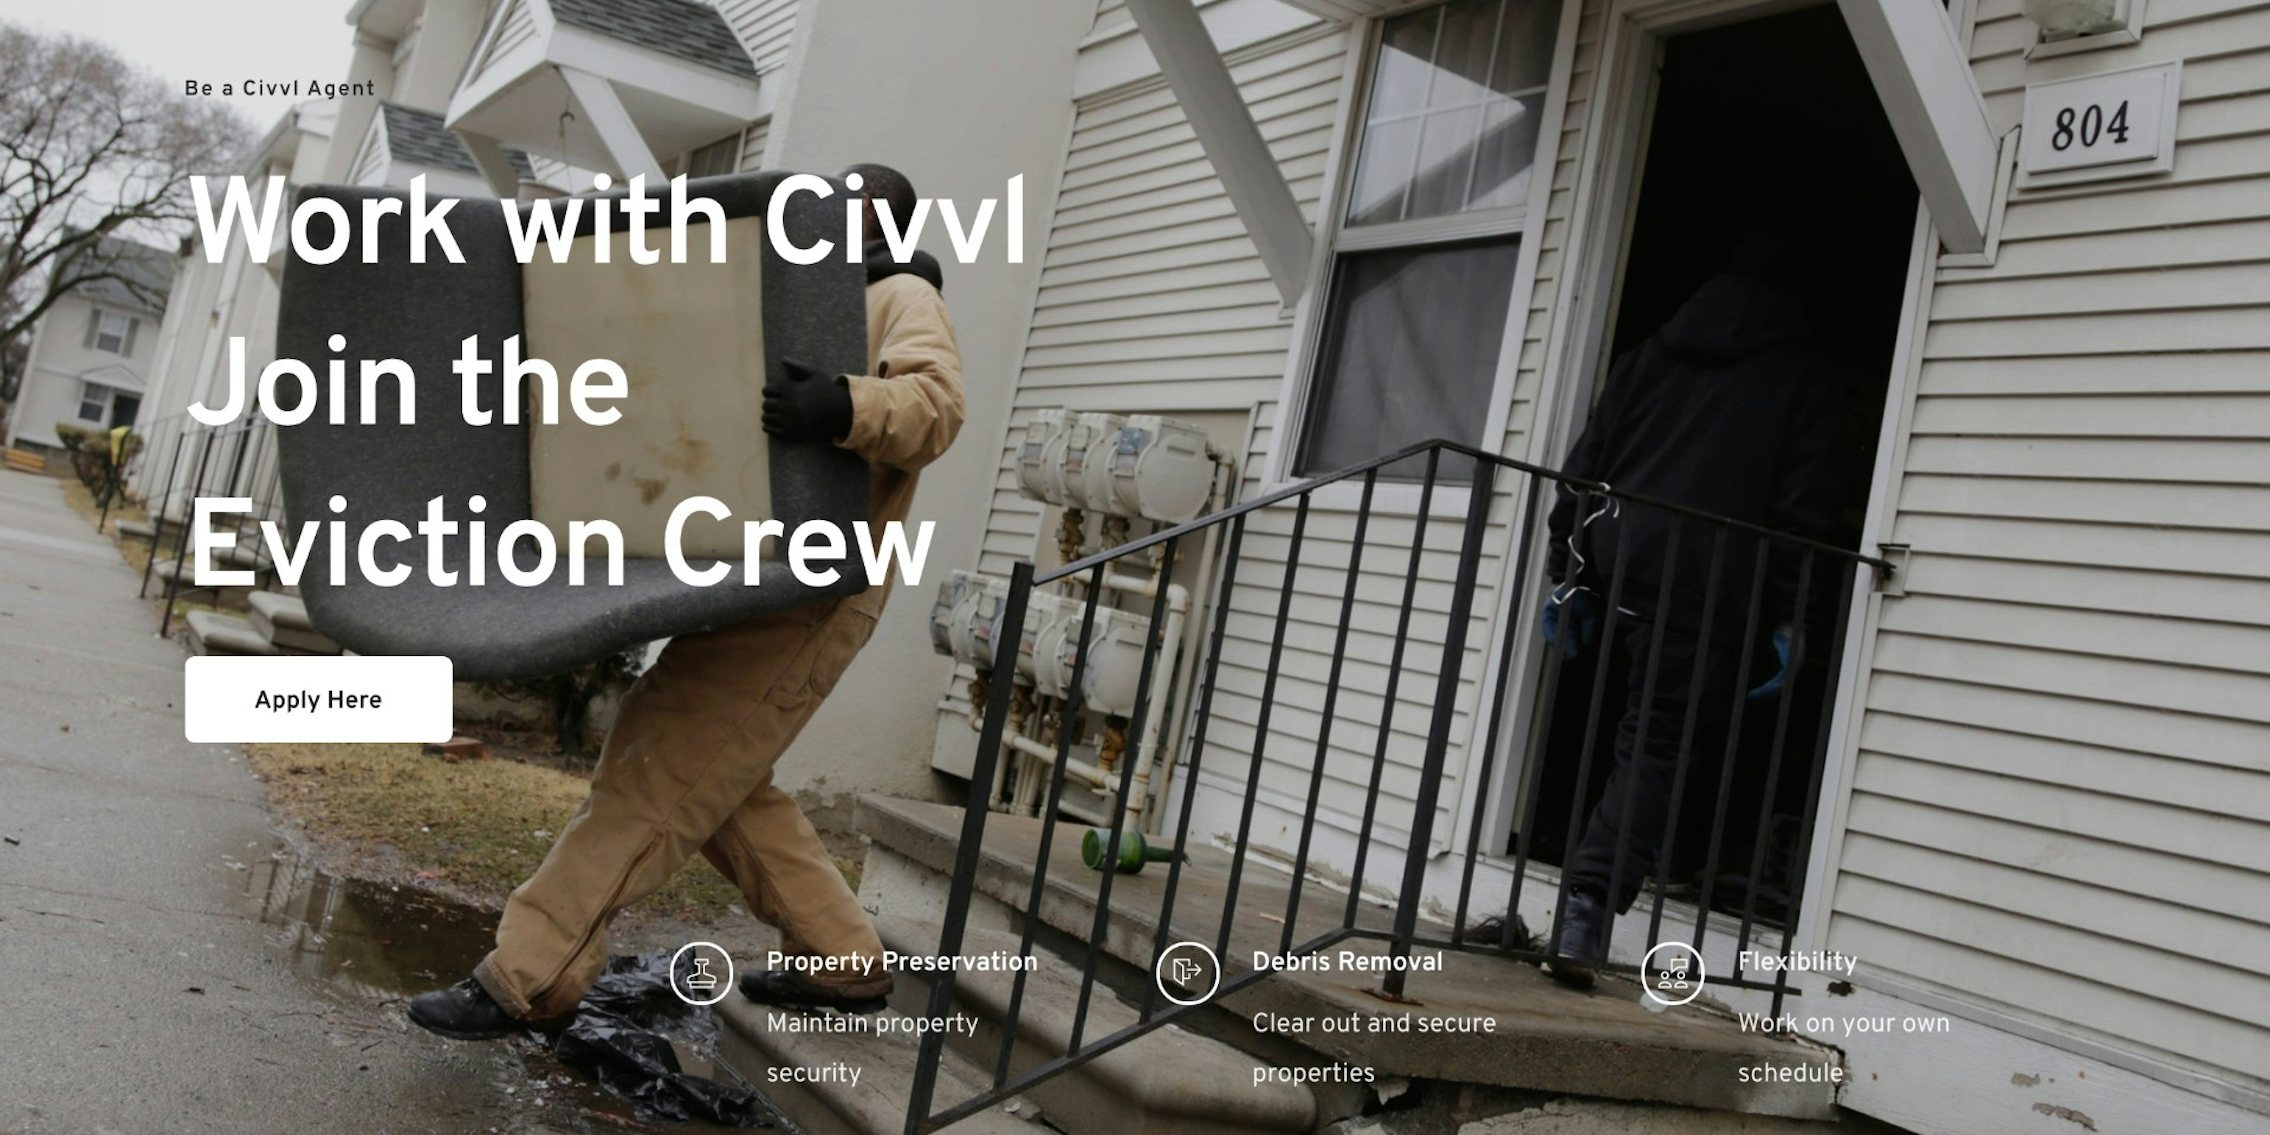 Civvl website advertises eviction gig